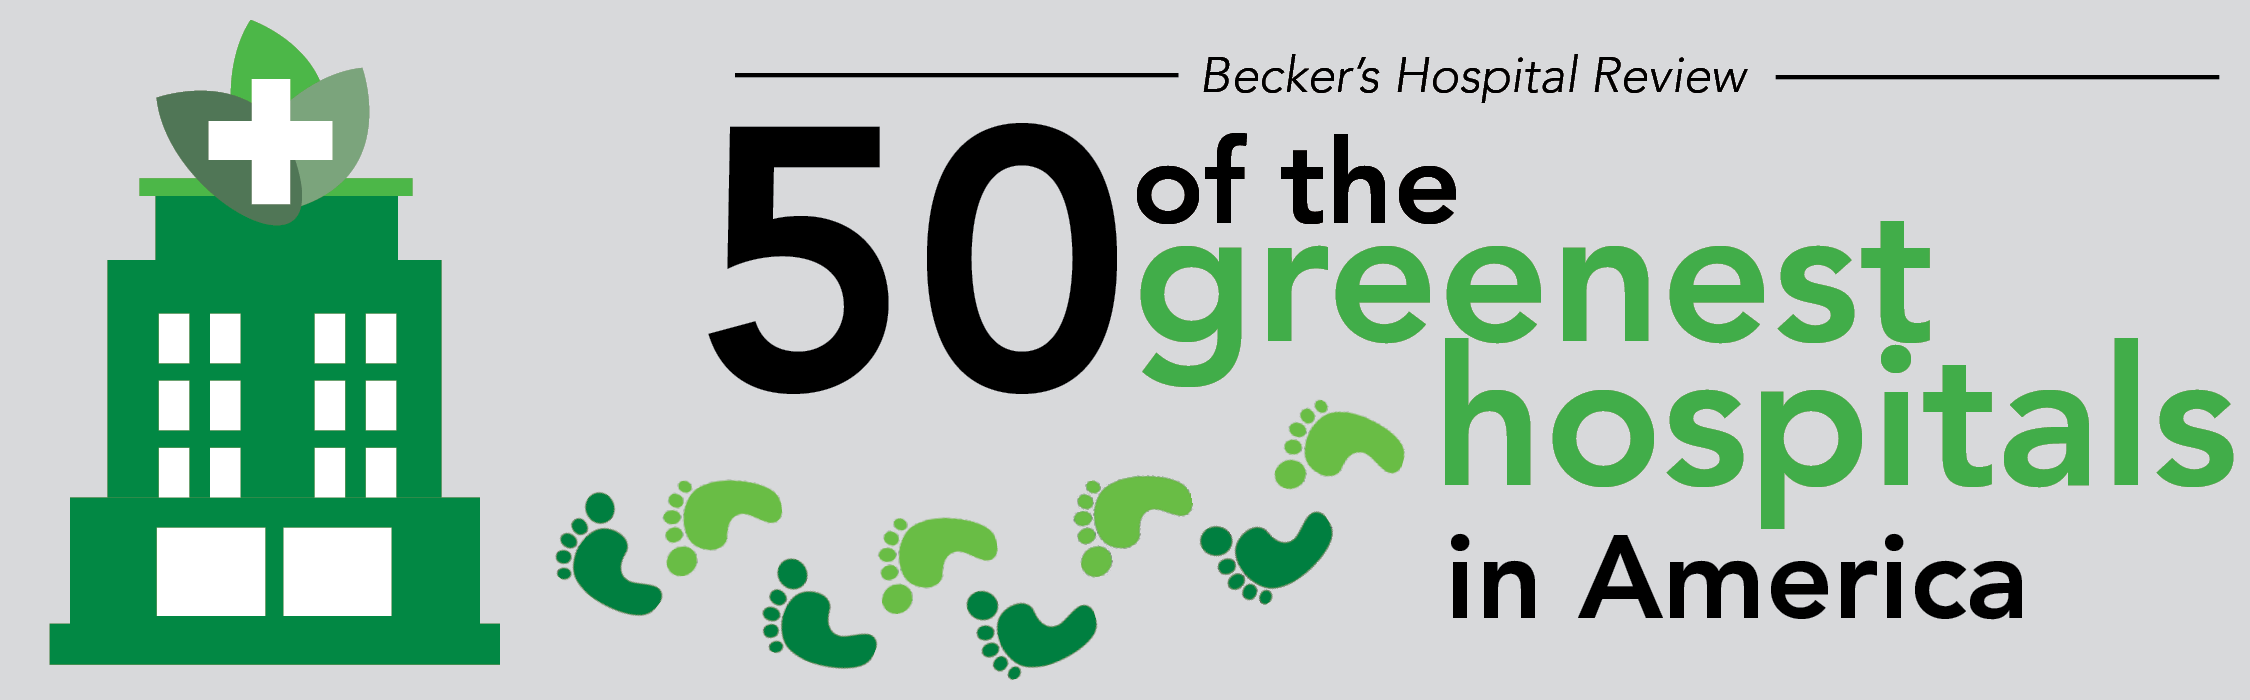 Becker's Hospital Review Logo - Becker's Hospital Review names 50 of the greenest hospitals